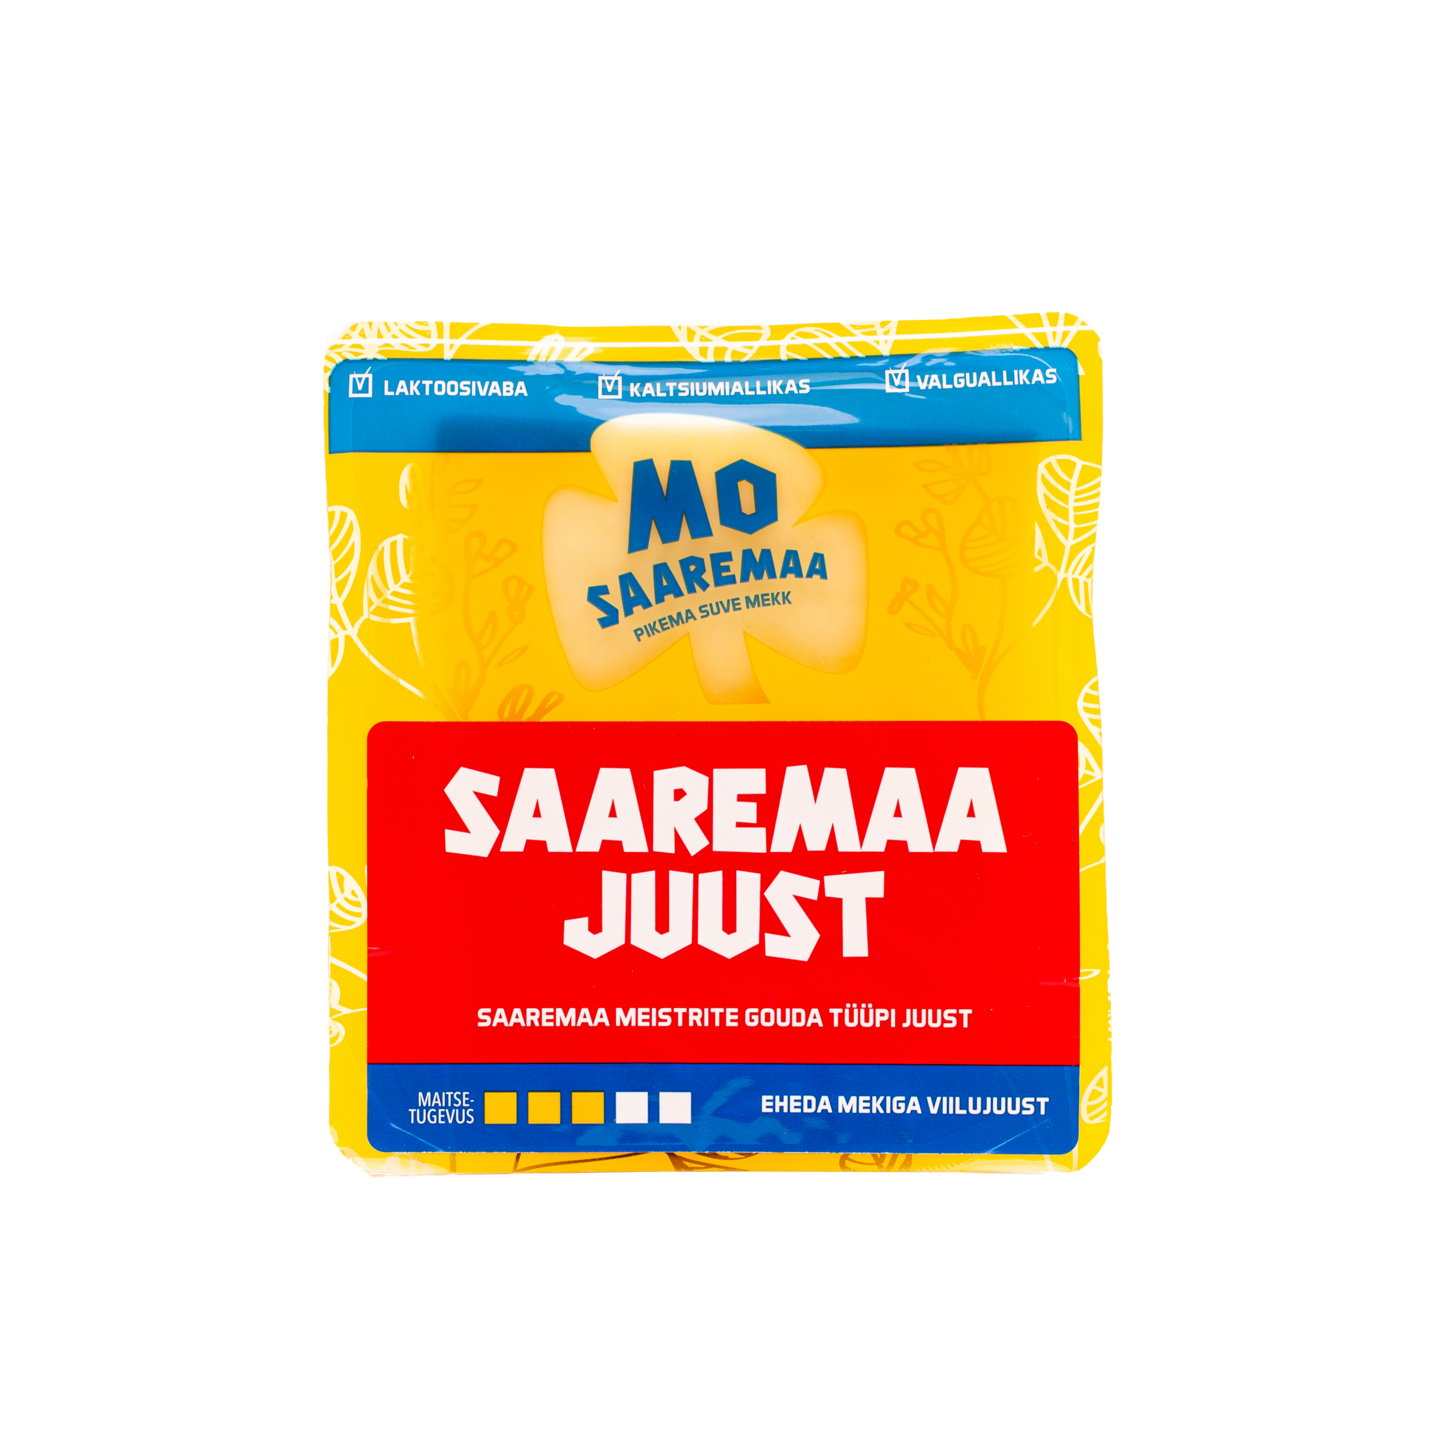 MÖ Saaremaa Saaremaa viipale 450g laktoosito